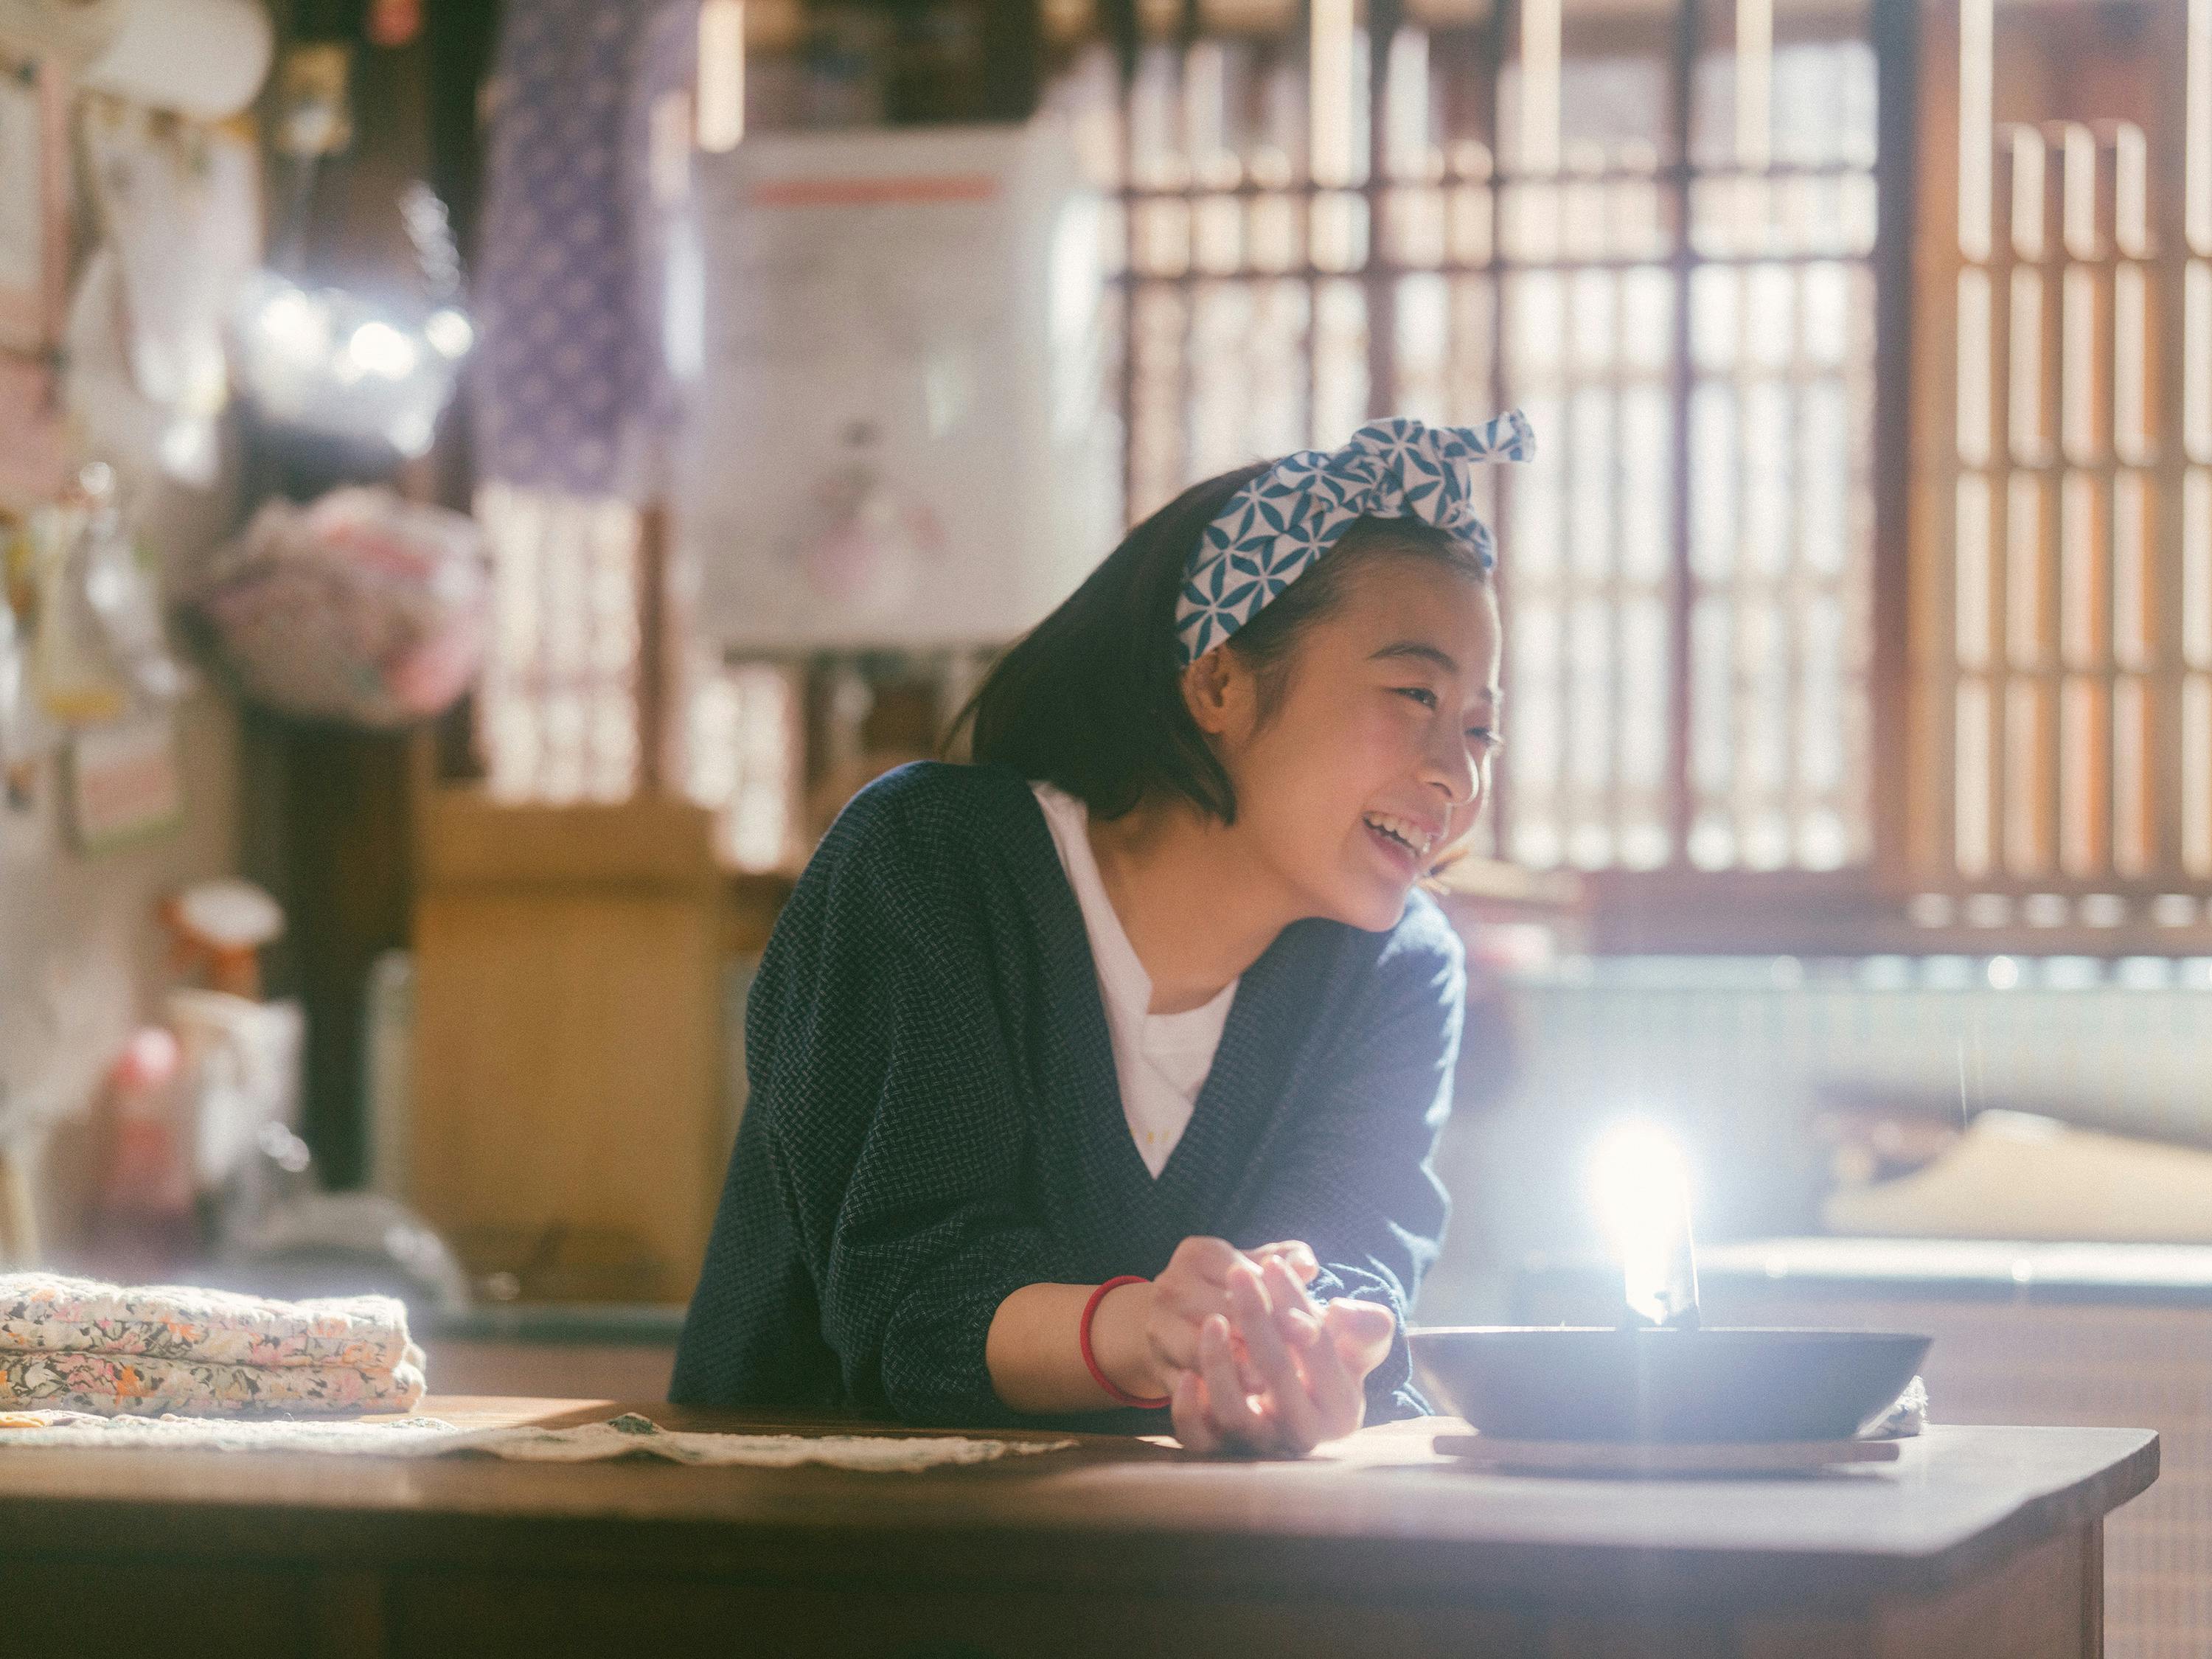 Kiyo (Nana Mori) smiles. She wears a patterned headband, white shirt, and a blue v-neck sweater.